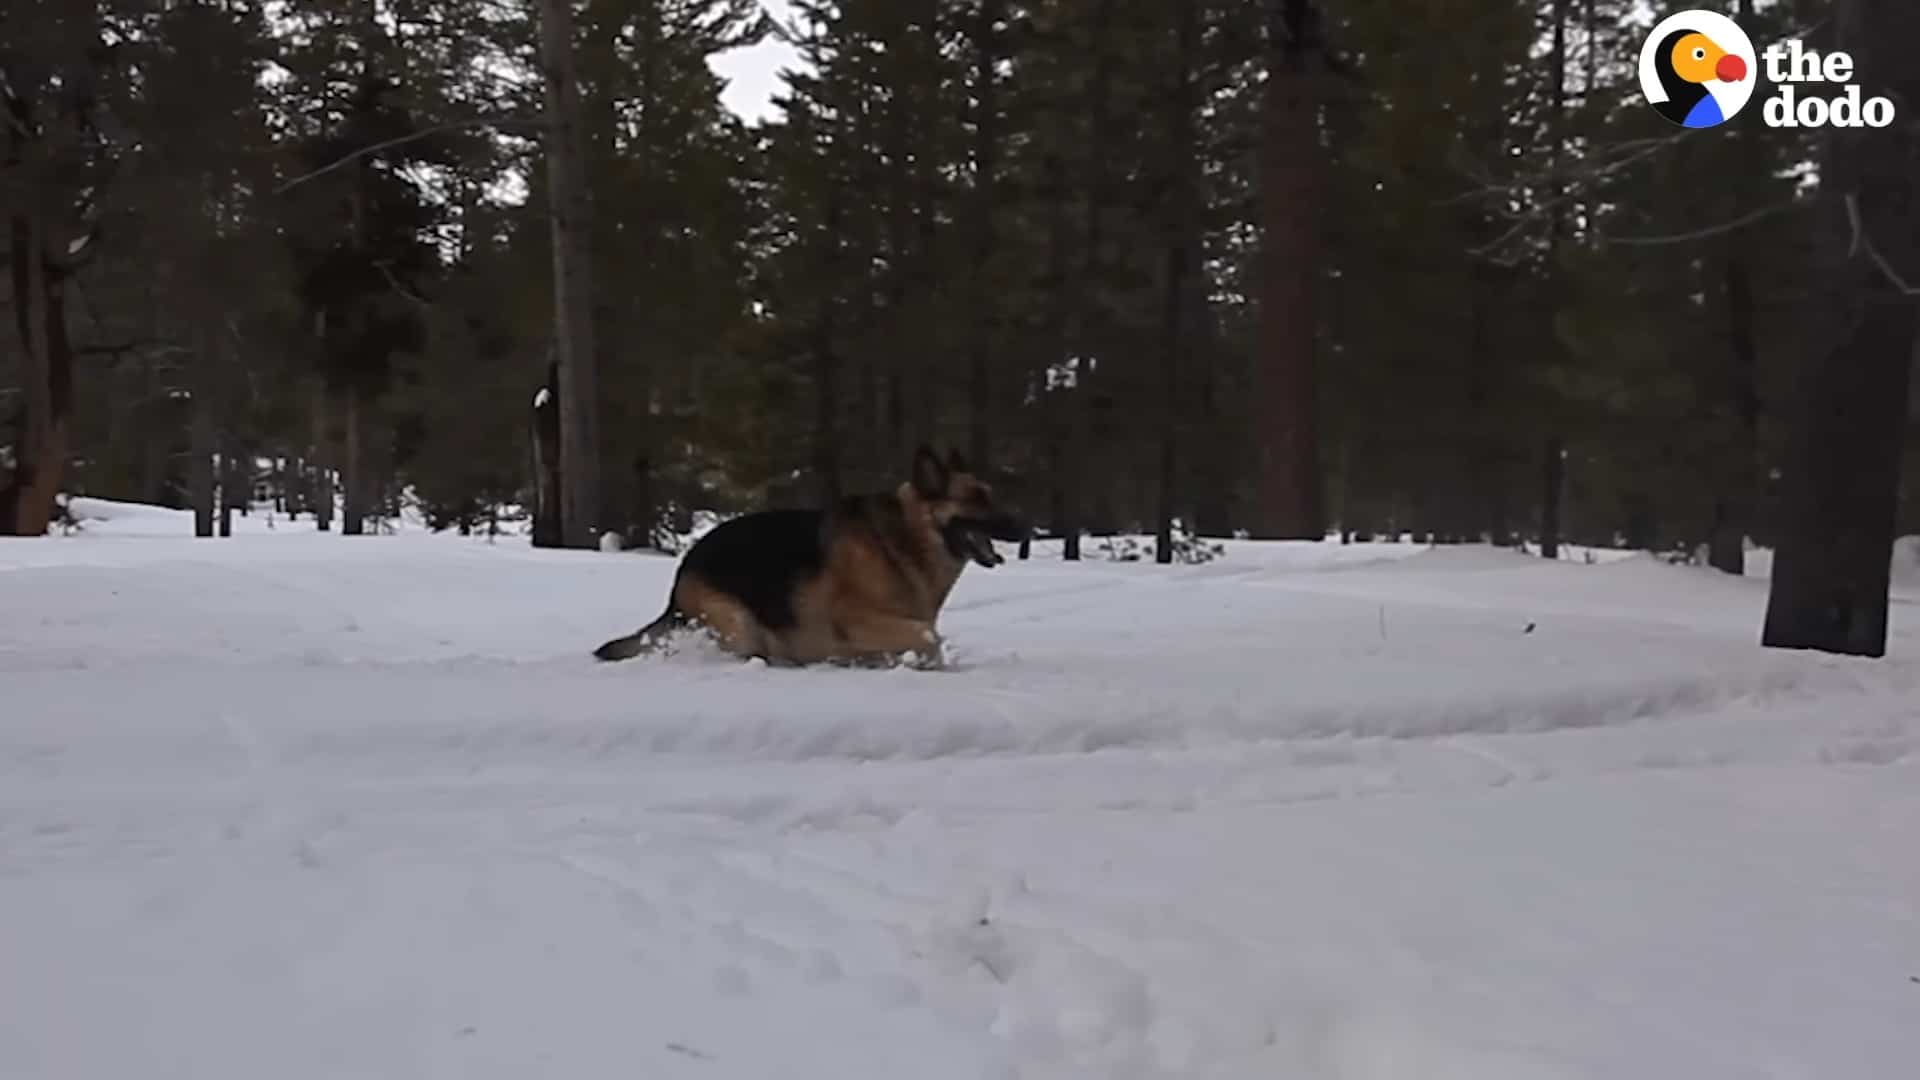 tony running through snow